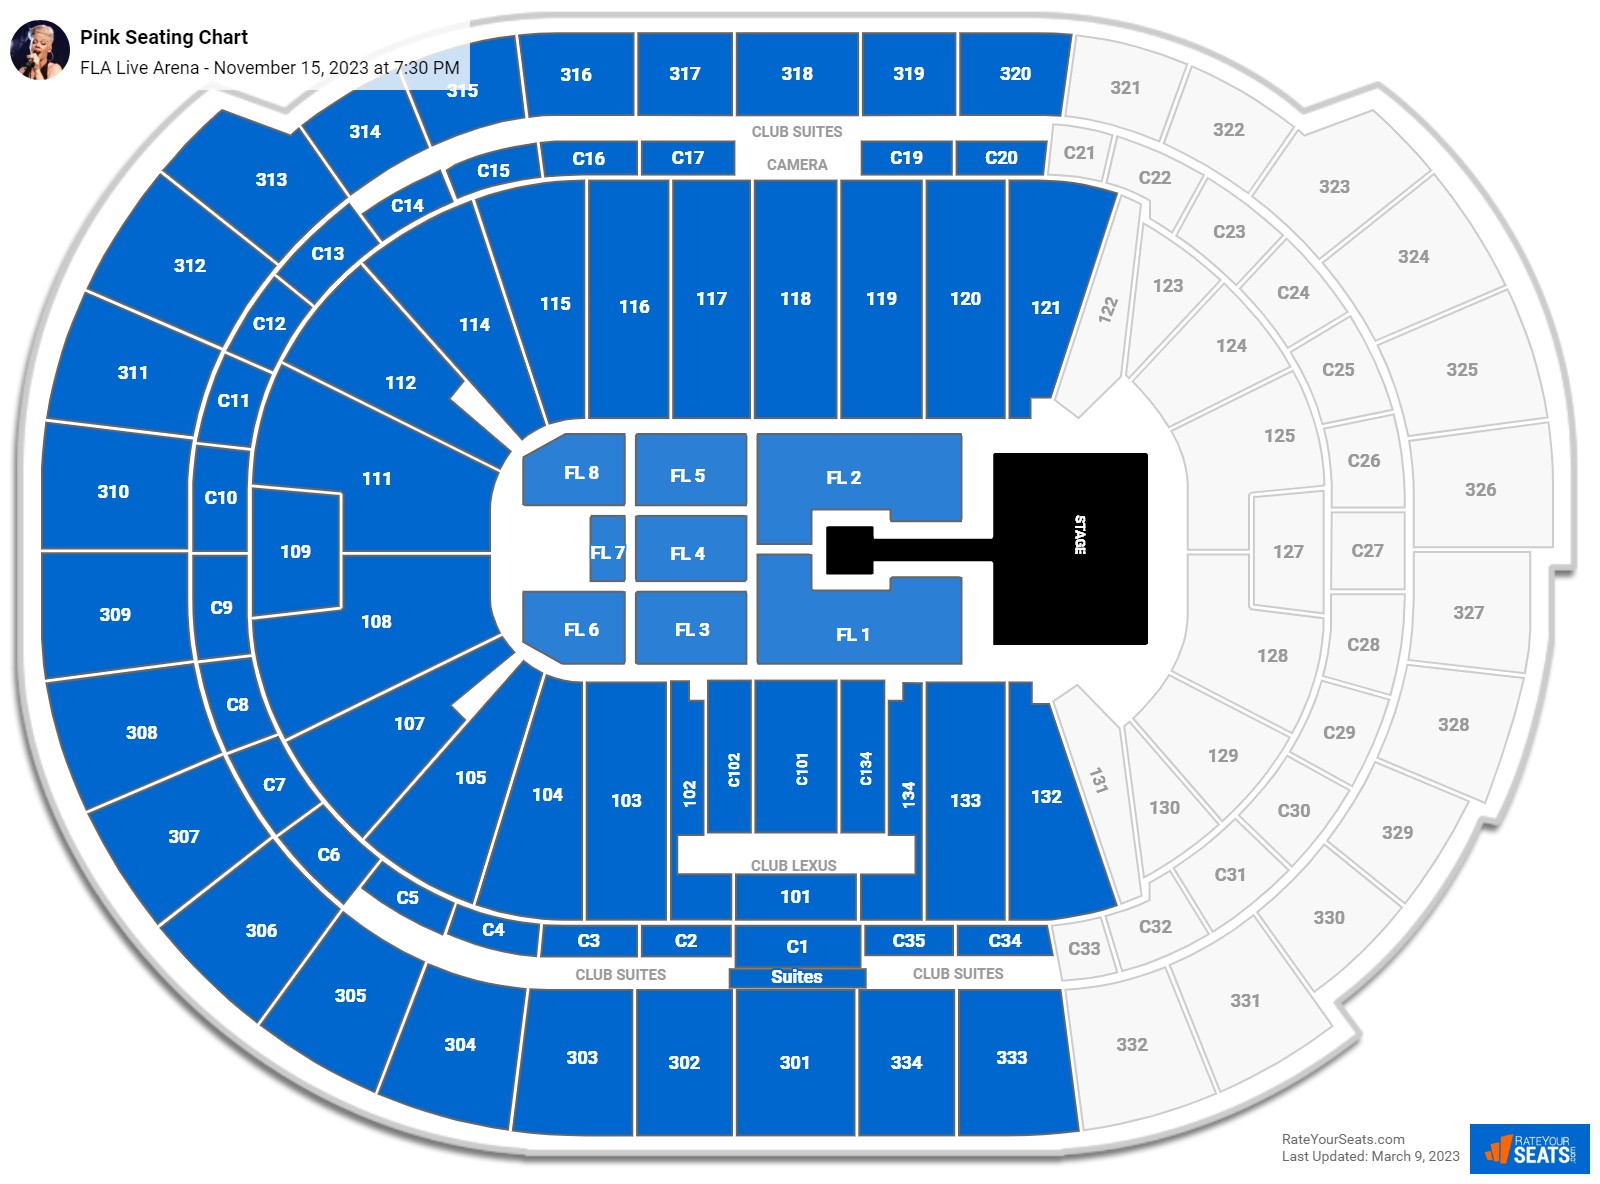 Amerant Bank Arena Concert Seating Chart - RateYourSeats.com